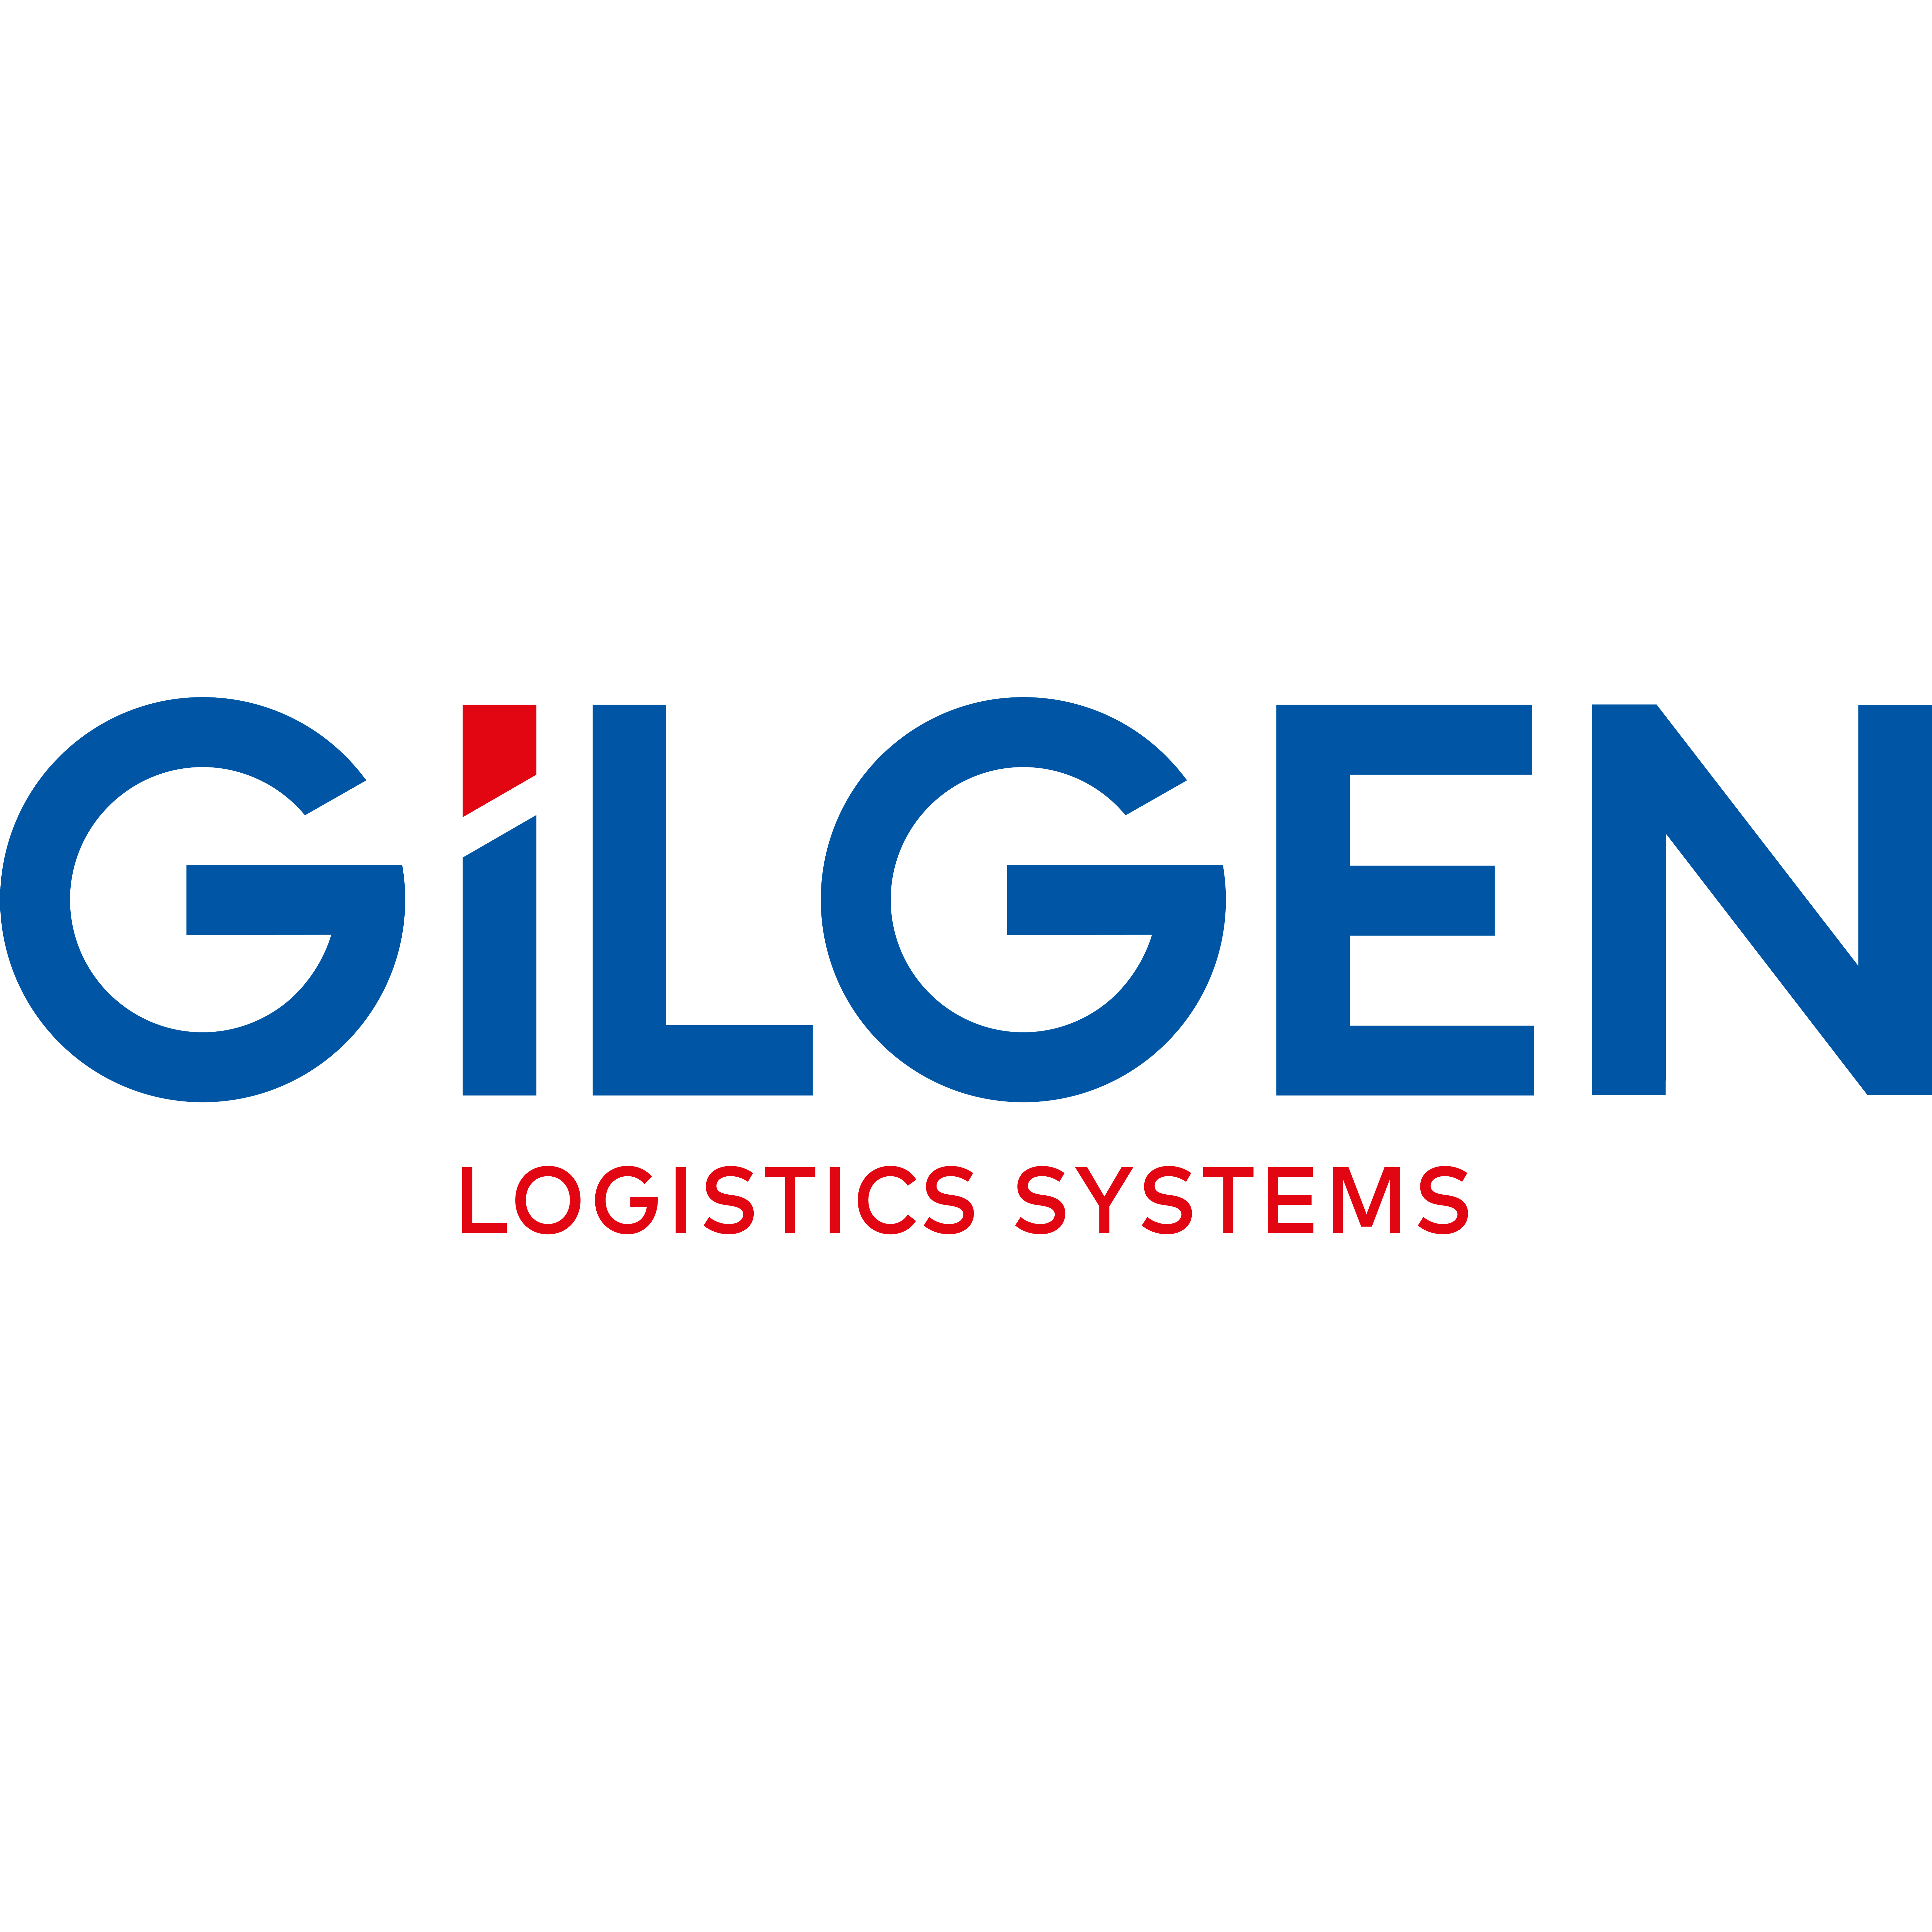 Gilgen Logistics AG Logo